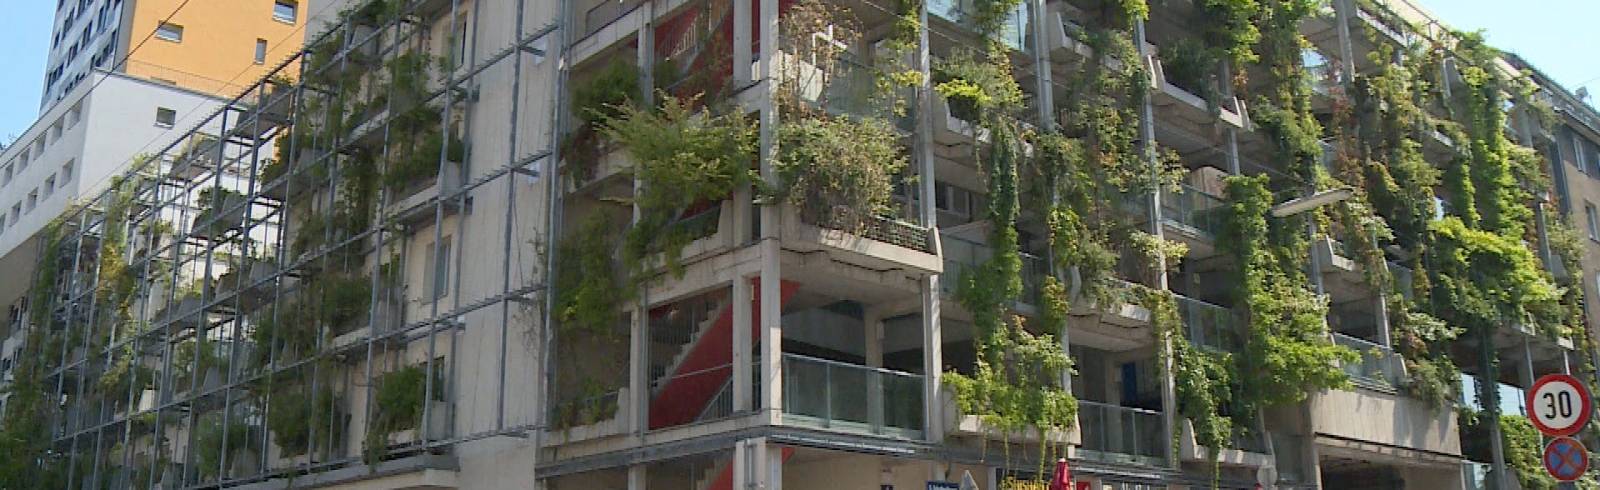 Stadt fördert Fassadenbegrünung